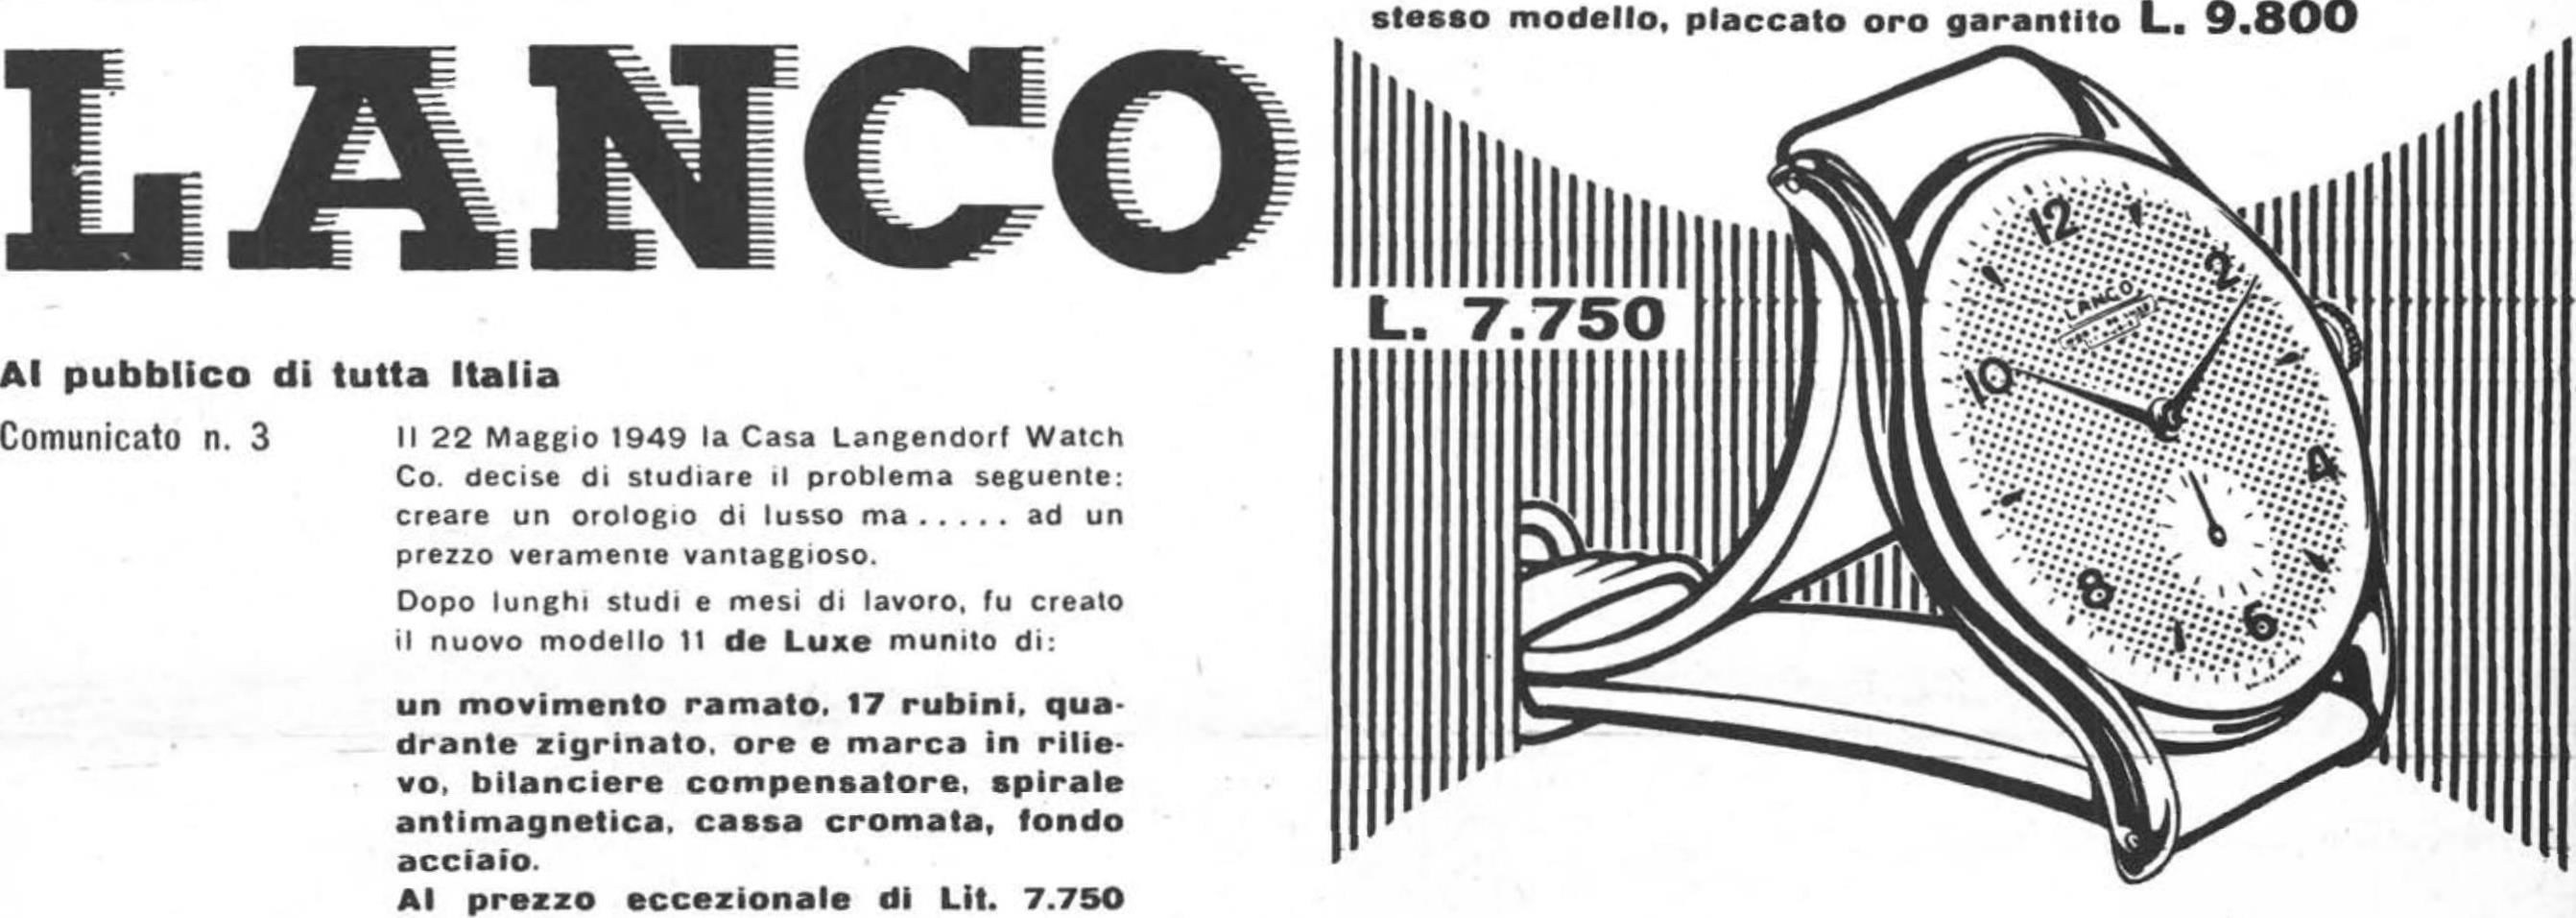 Lanco 1951 223.jpg